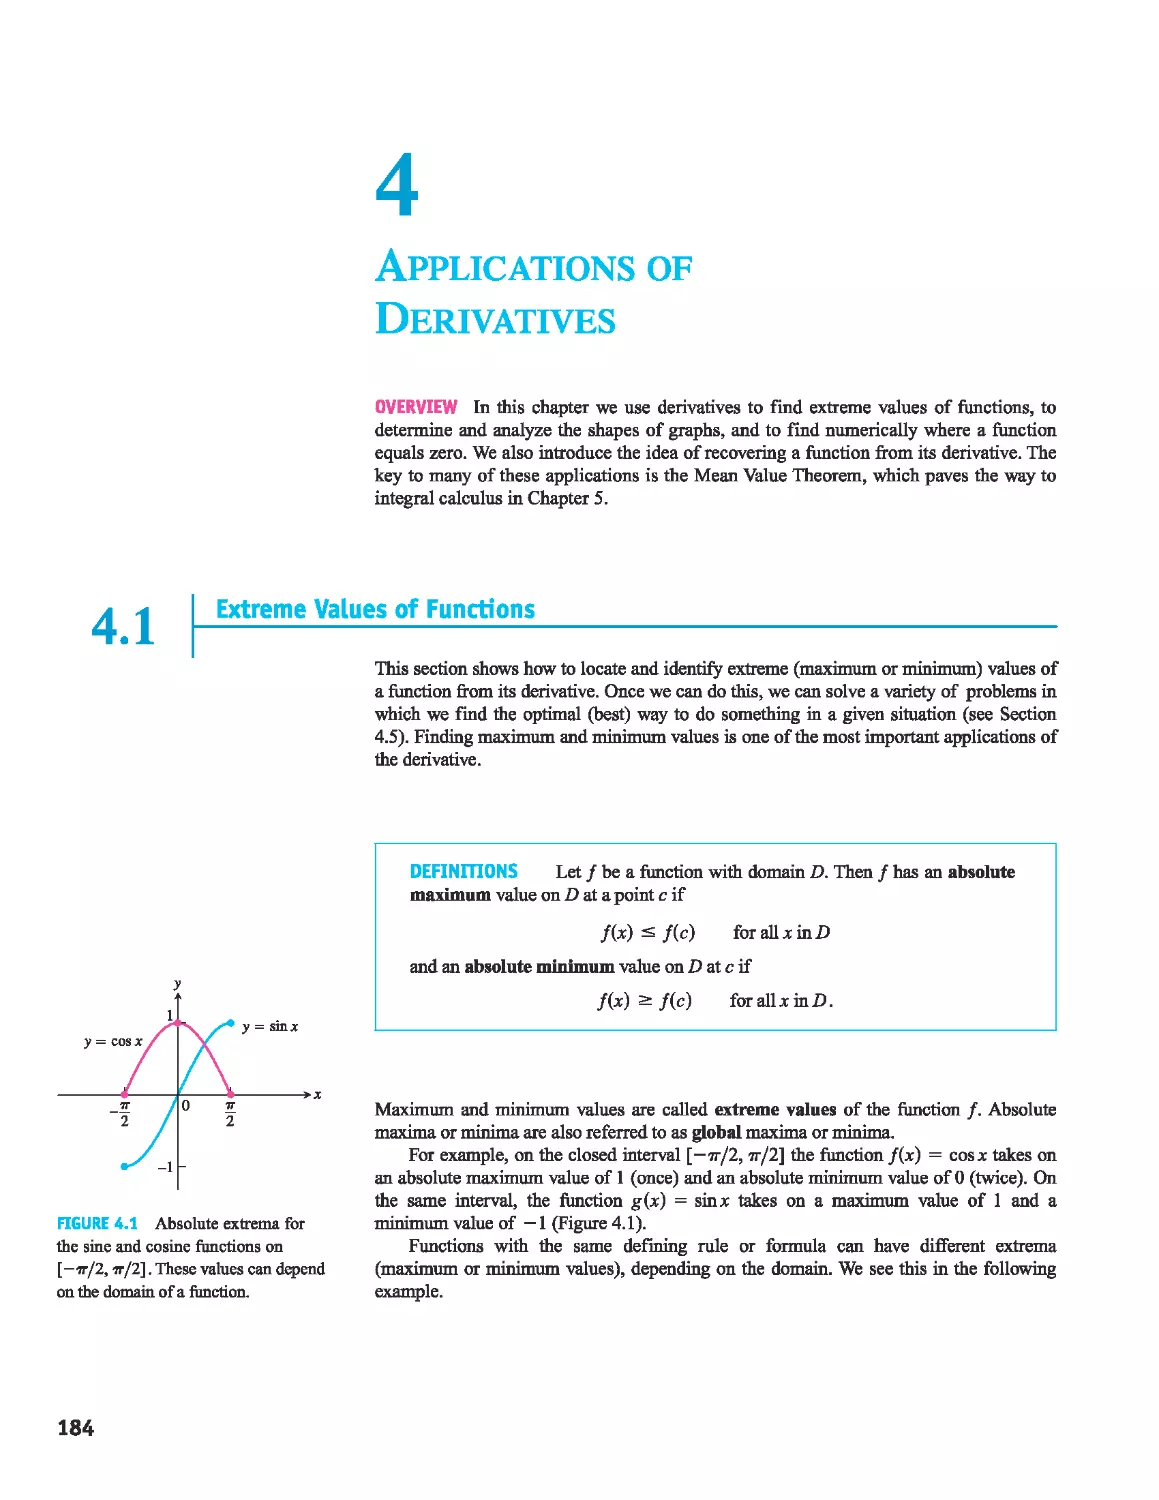 4 - Applications of Derivatives